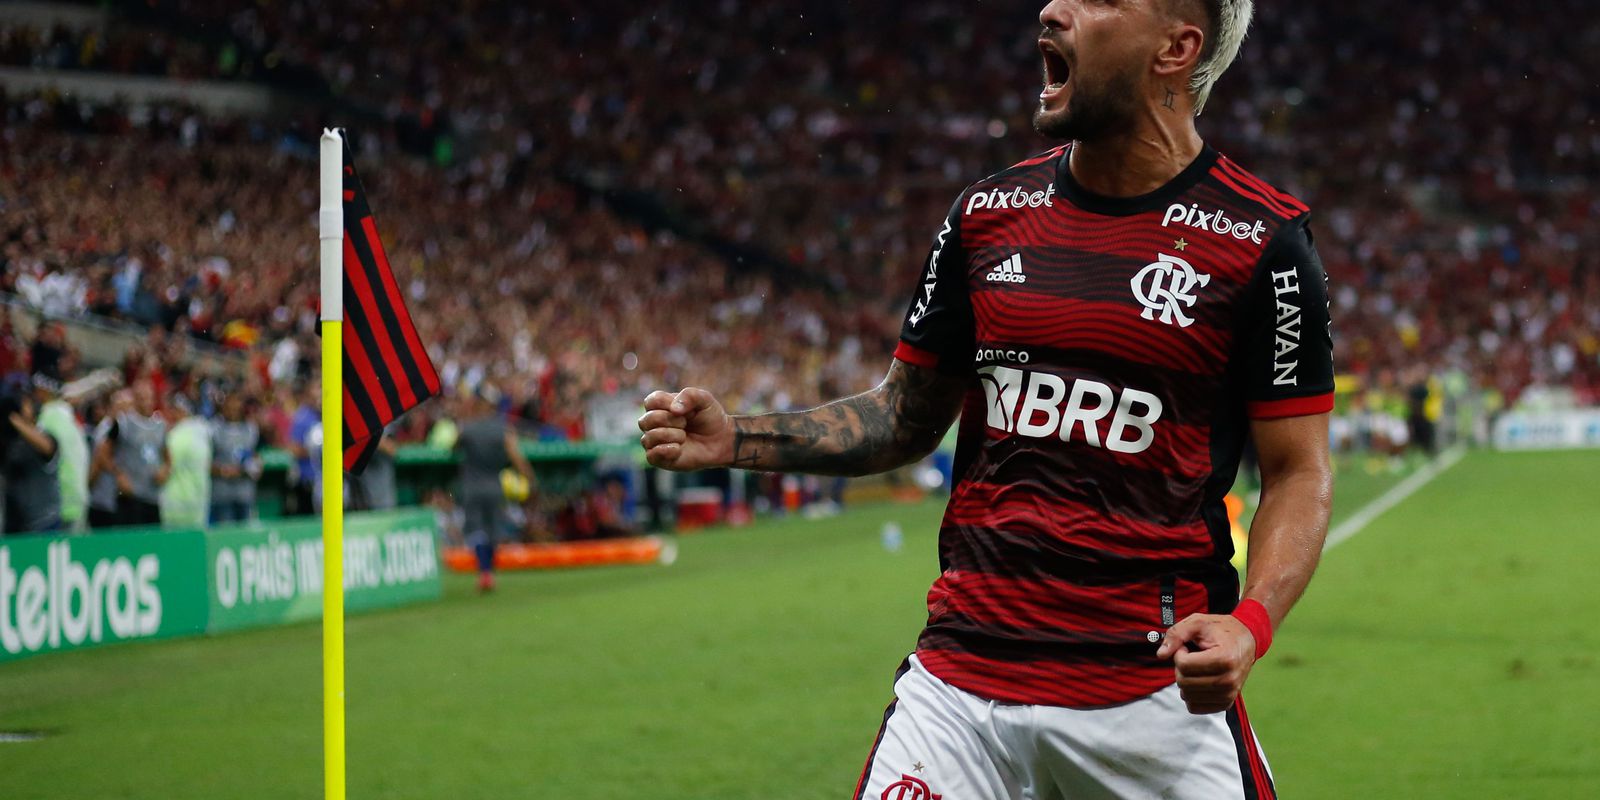 Copa do Brasil: Flamengo defeats São Paulo at Maracanã and reaches the final